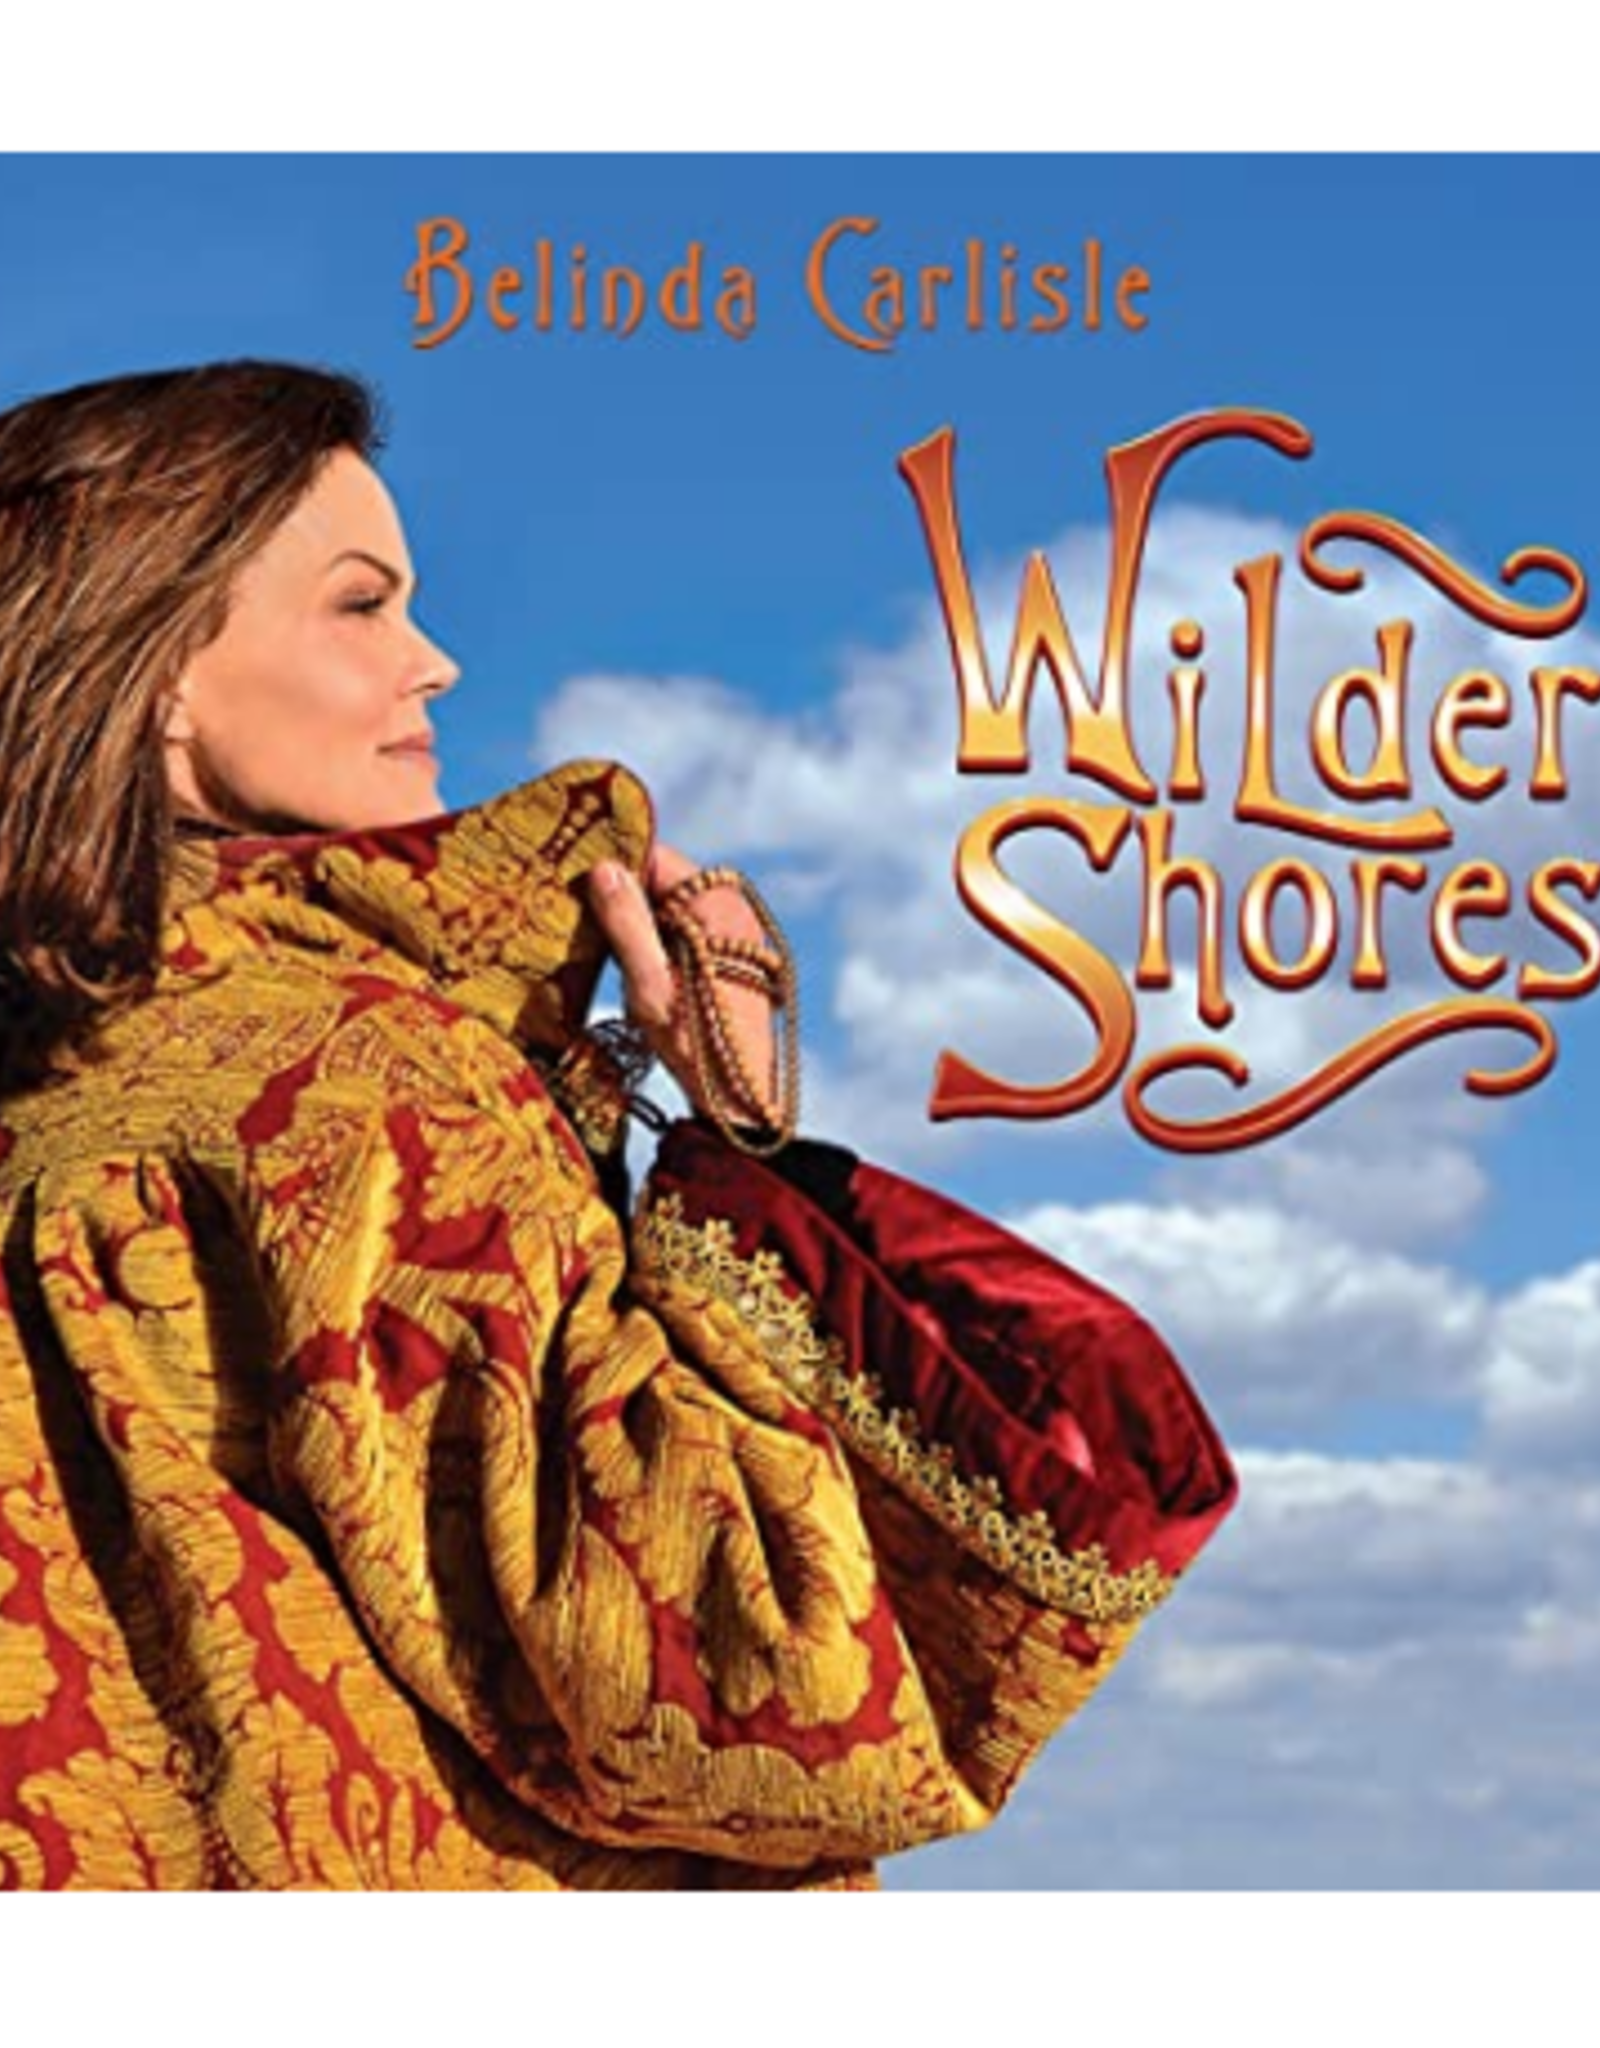 Belinda Carlisle Wilder Shores CD by Belinda Carlisle